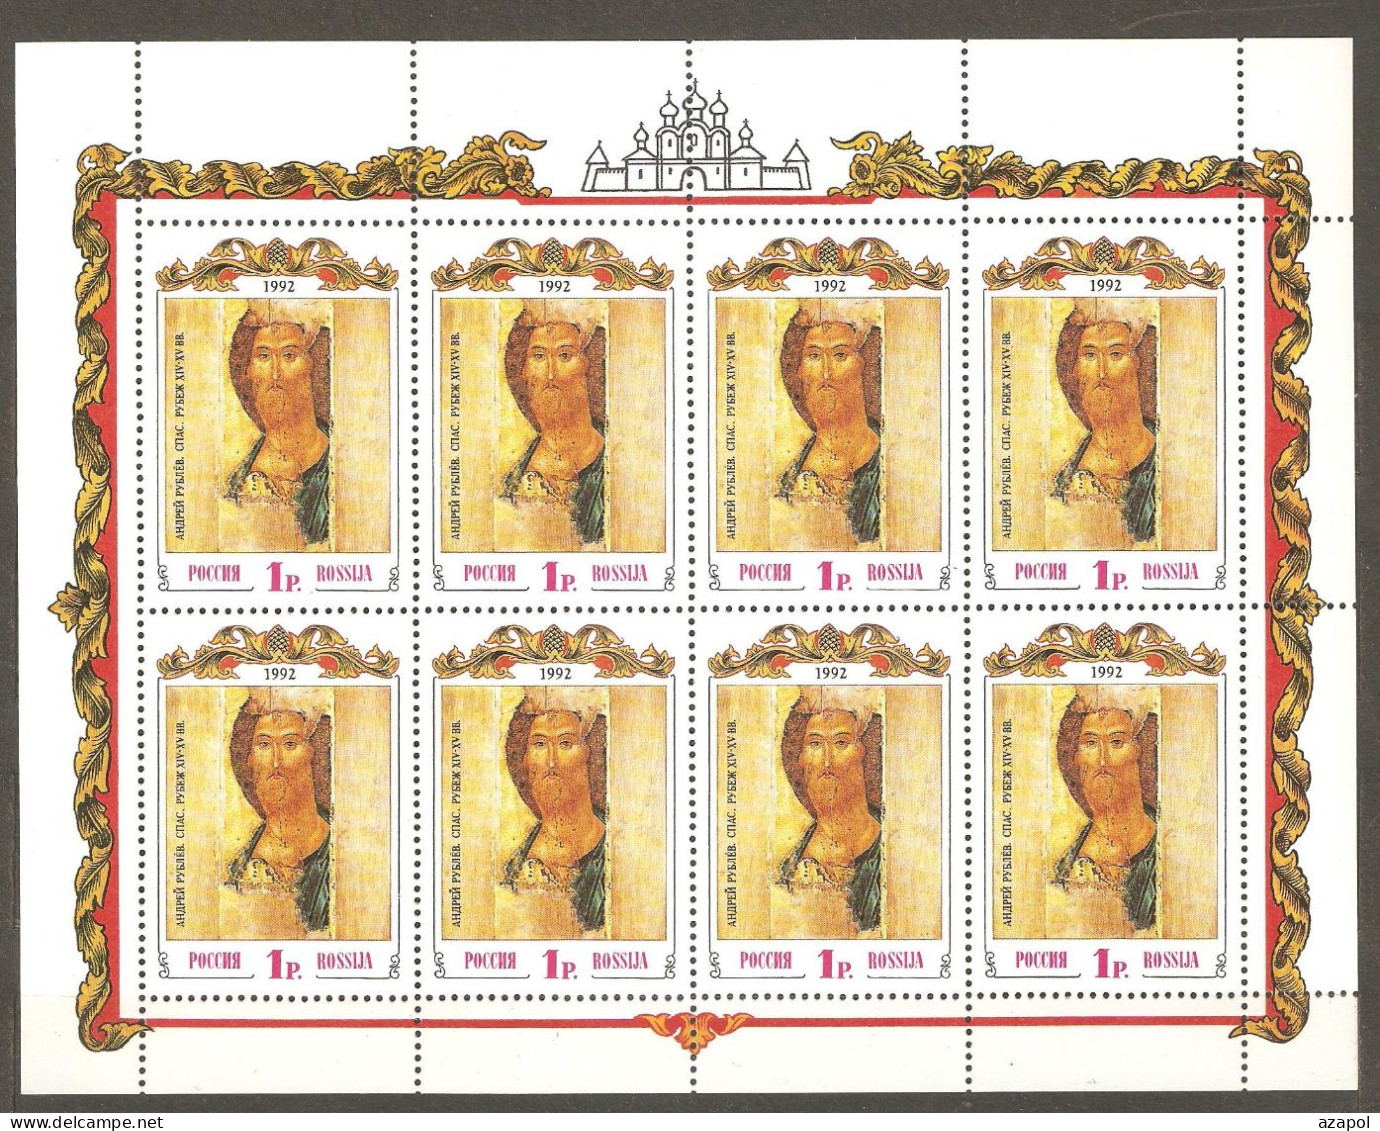 Russia: Mint Sheet, Icon Of Andrei Rublyov, 1992, Mi#257, MNH - Religious